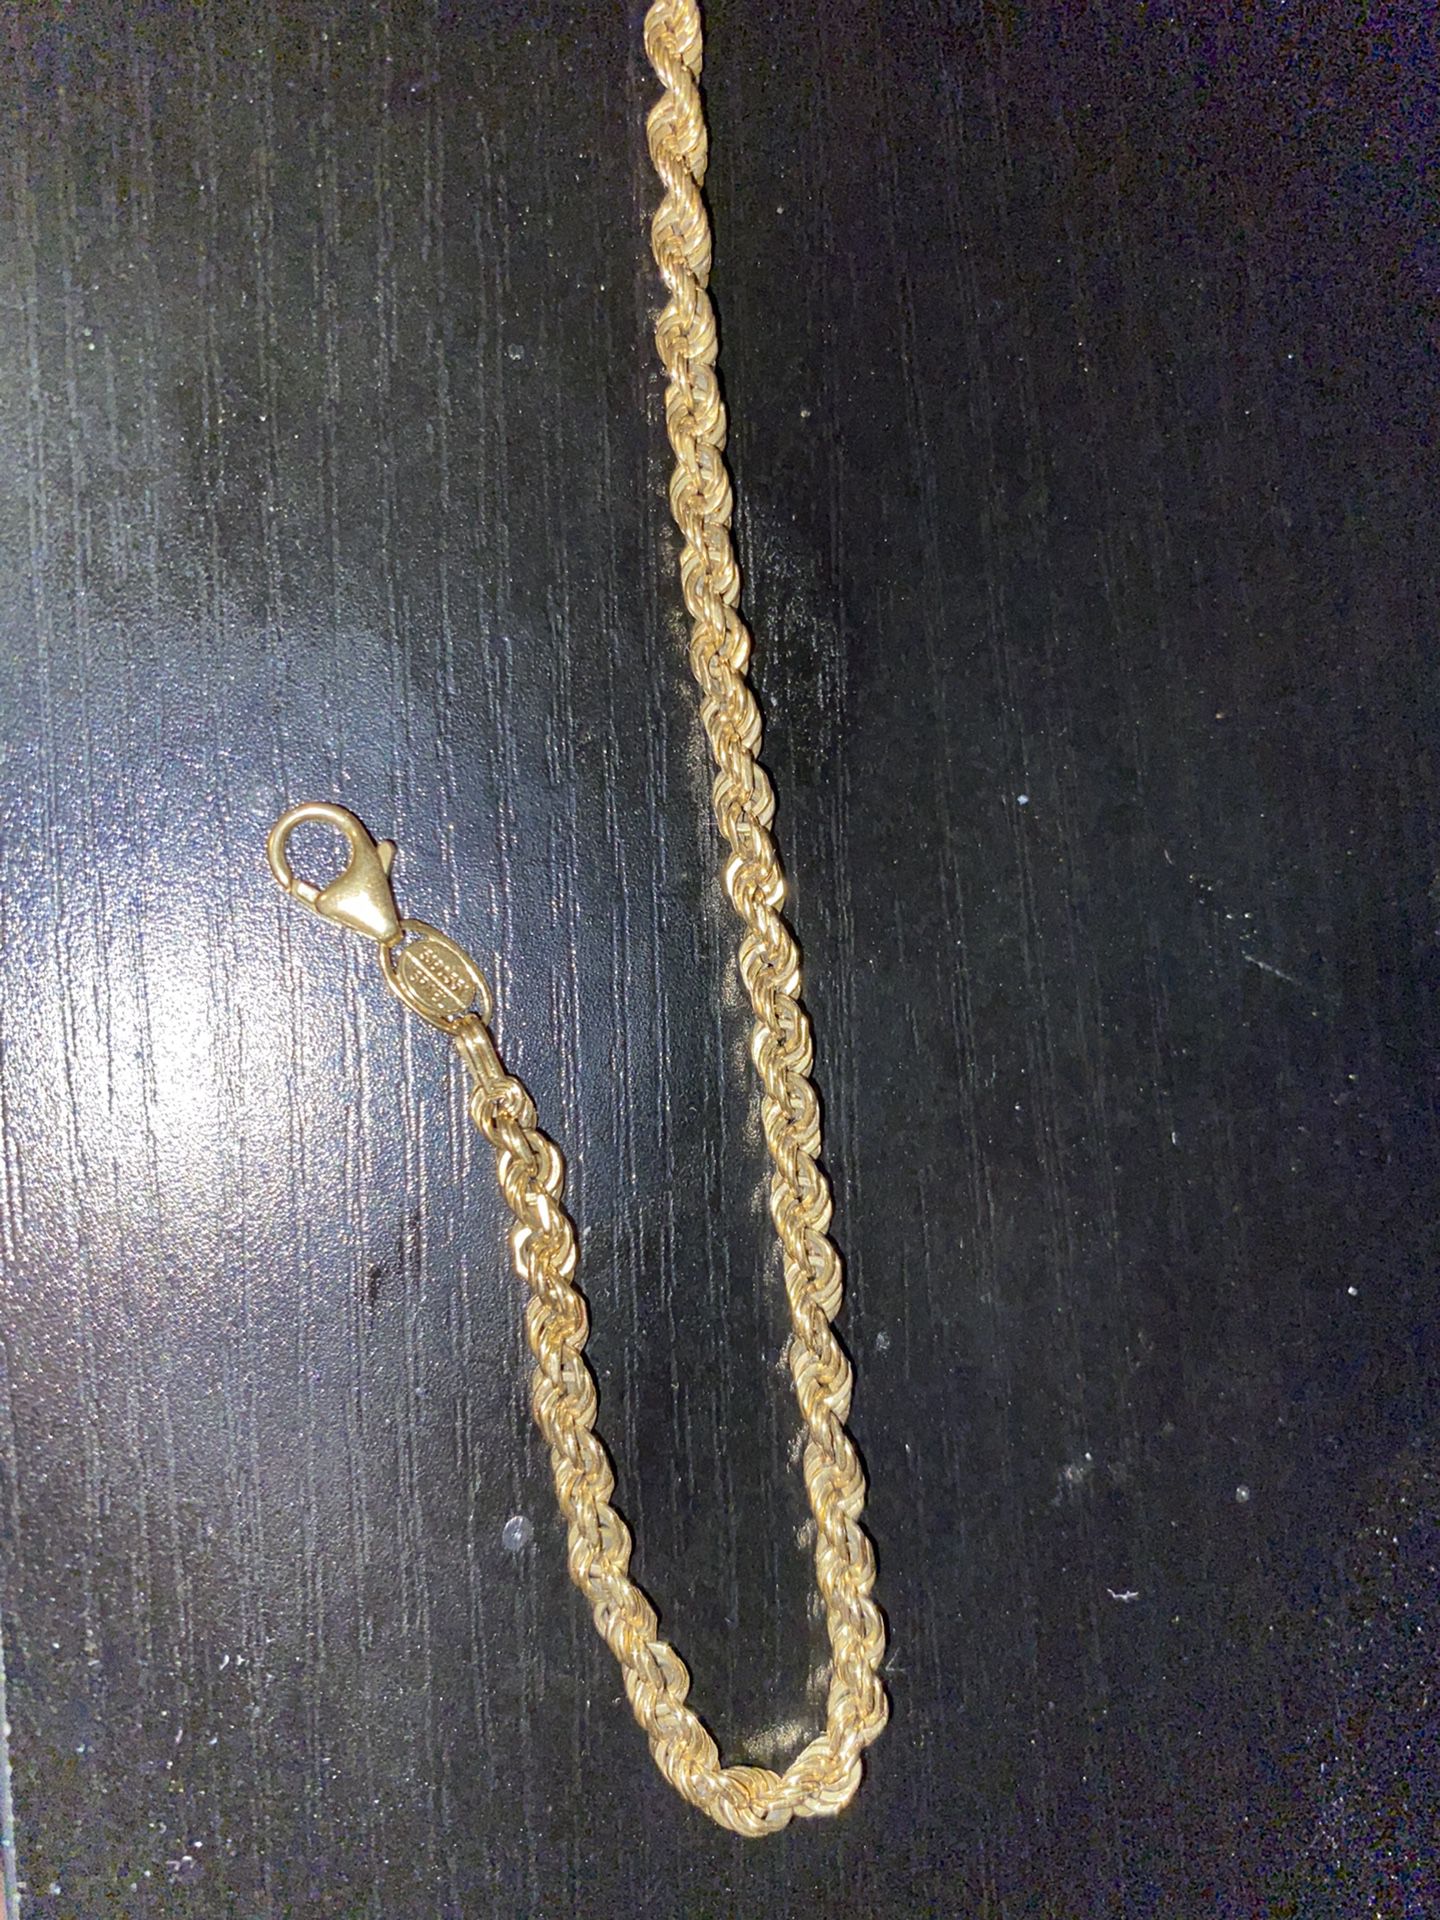 8 inch rope bracelet 14k gold